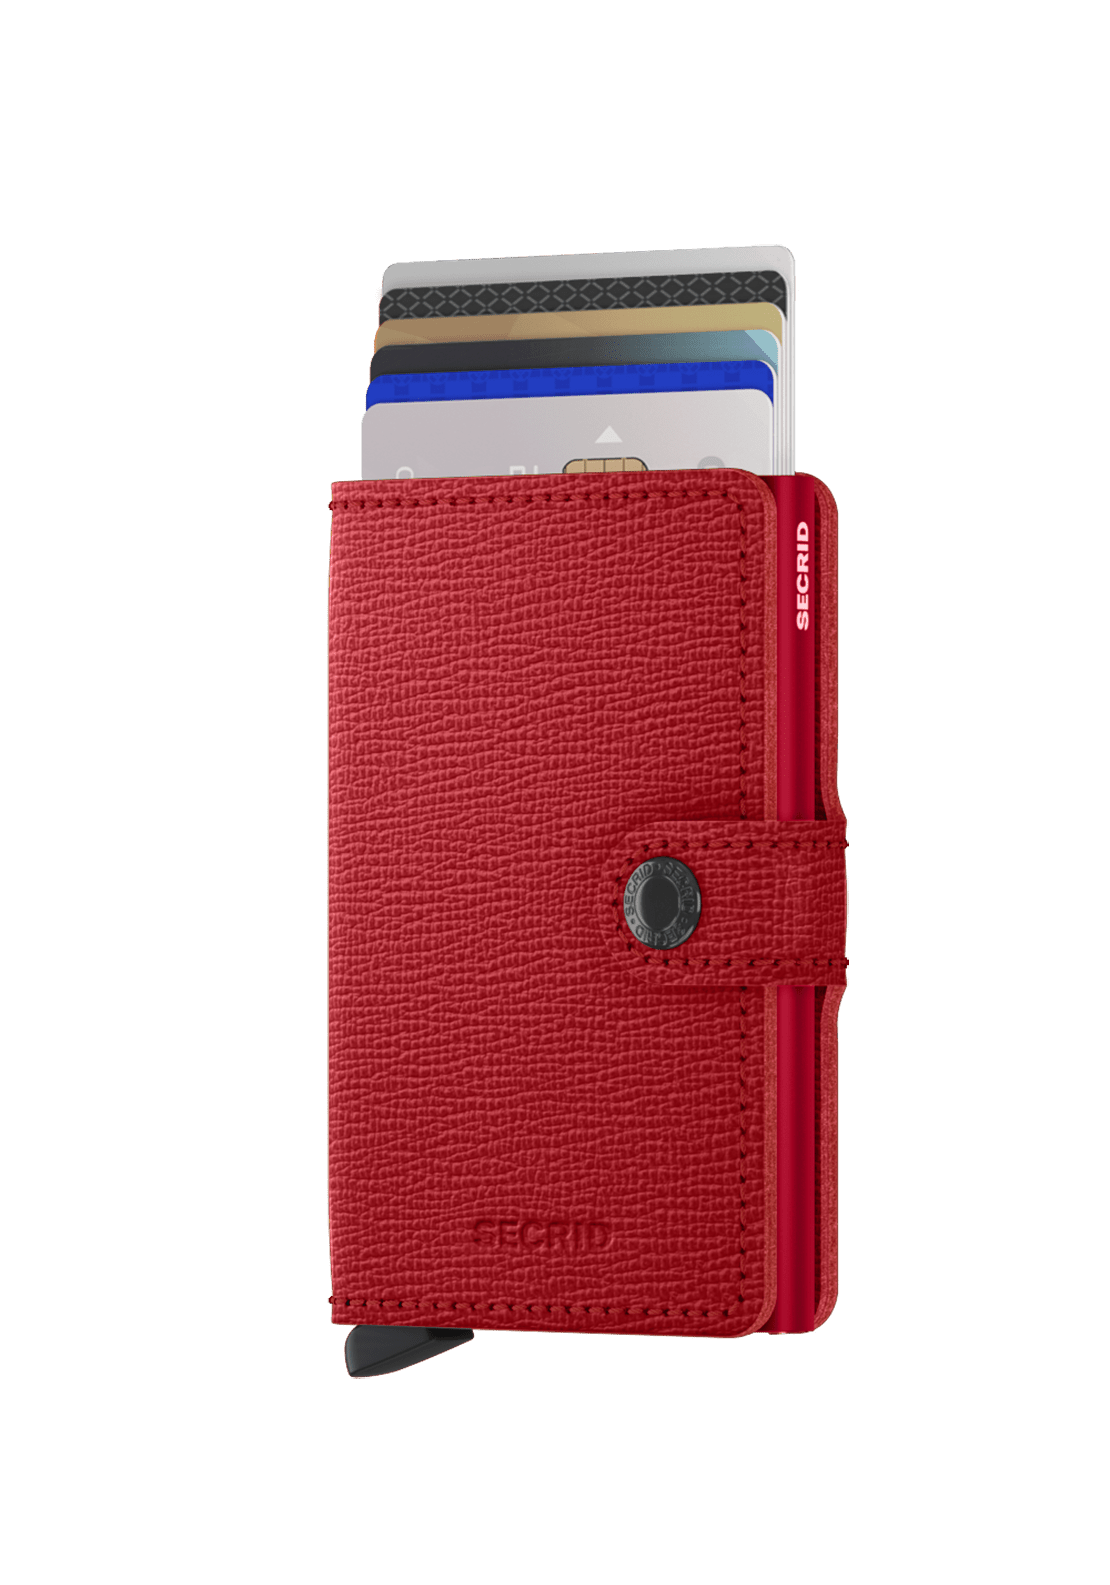 Secrid Mini Crisple Wallet 1 Shaws Department Stores